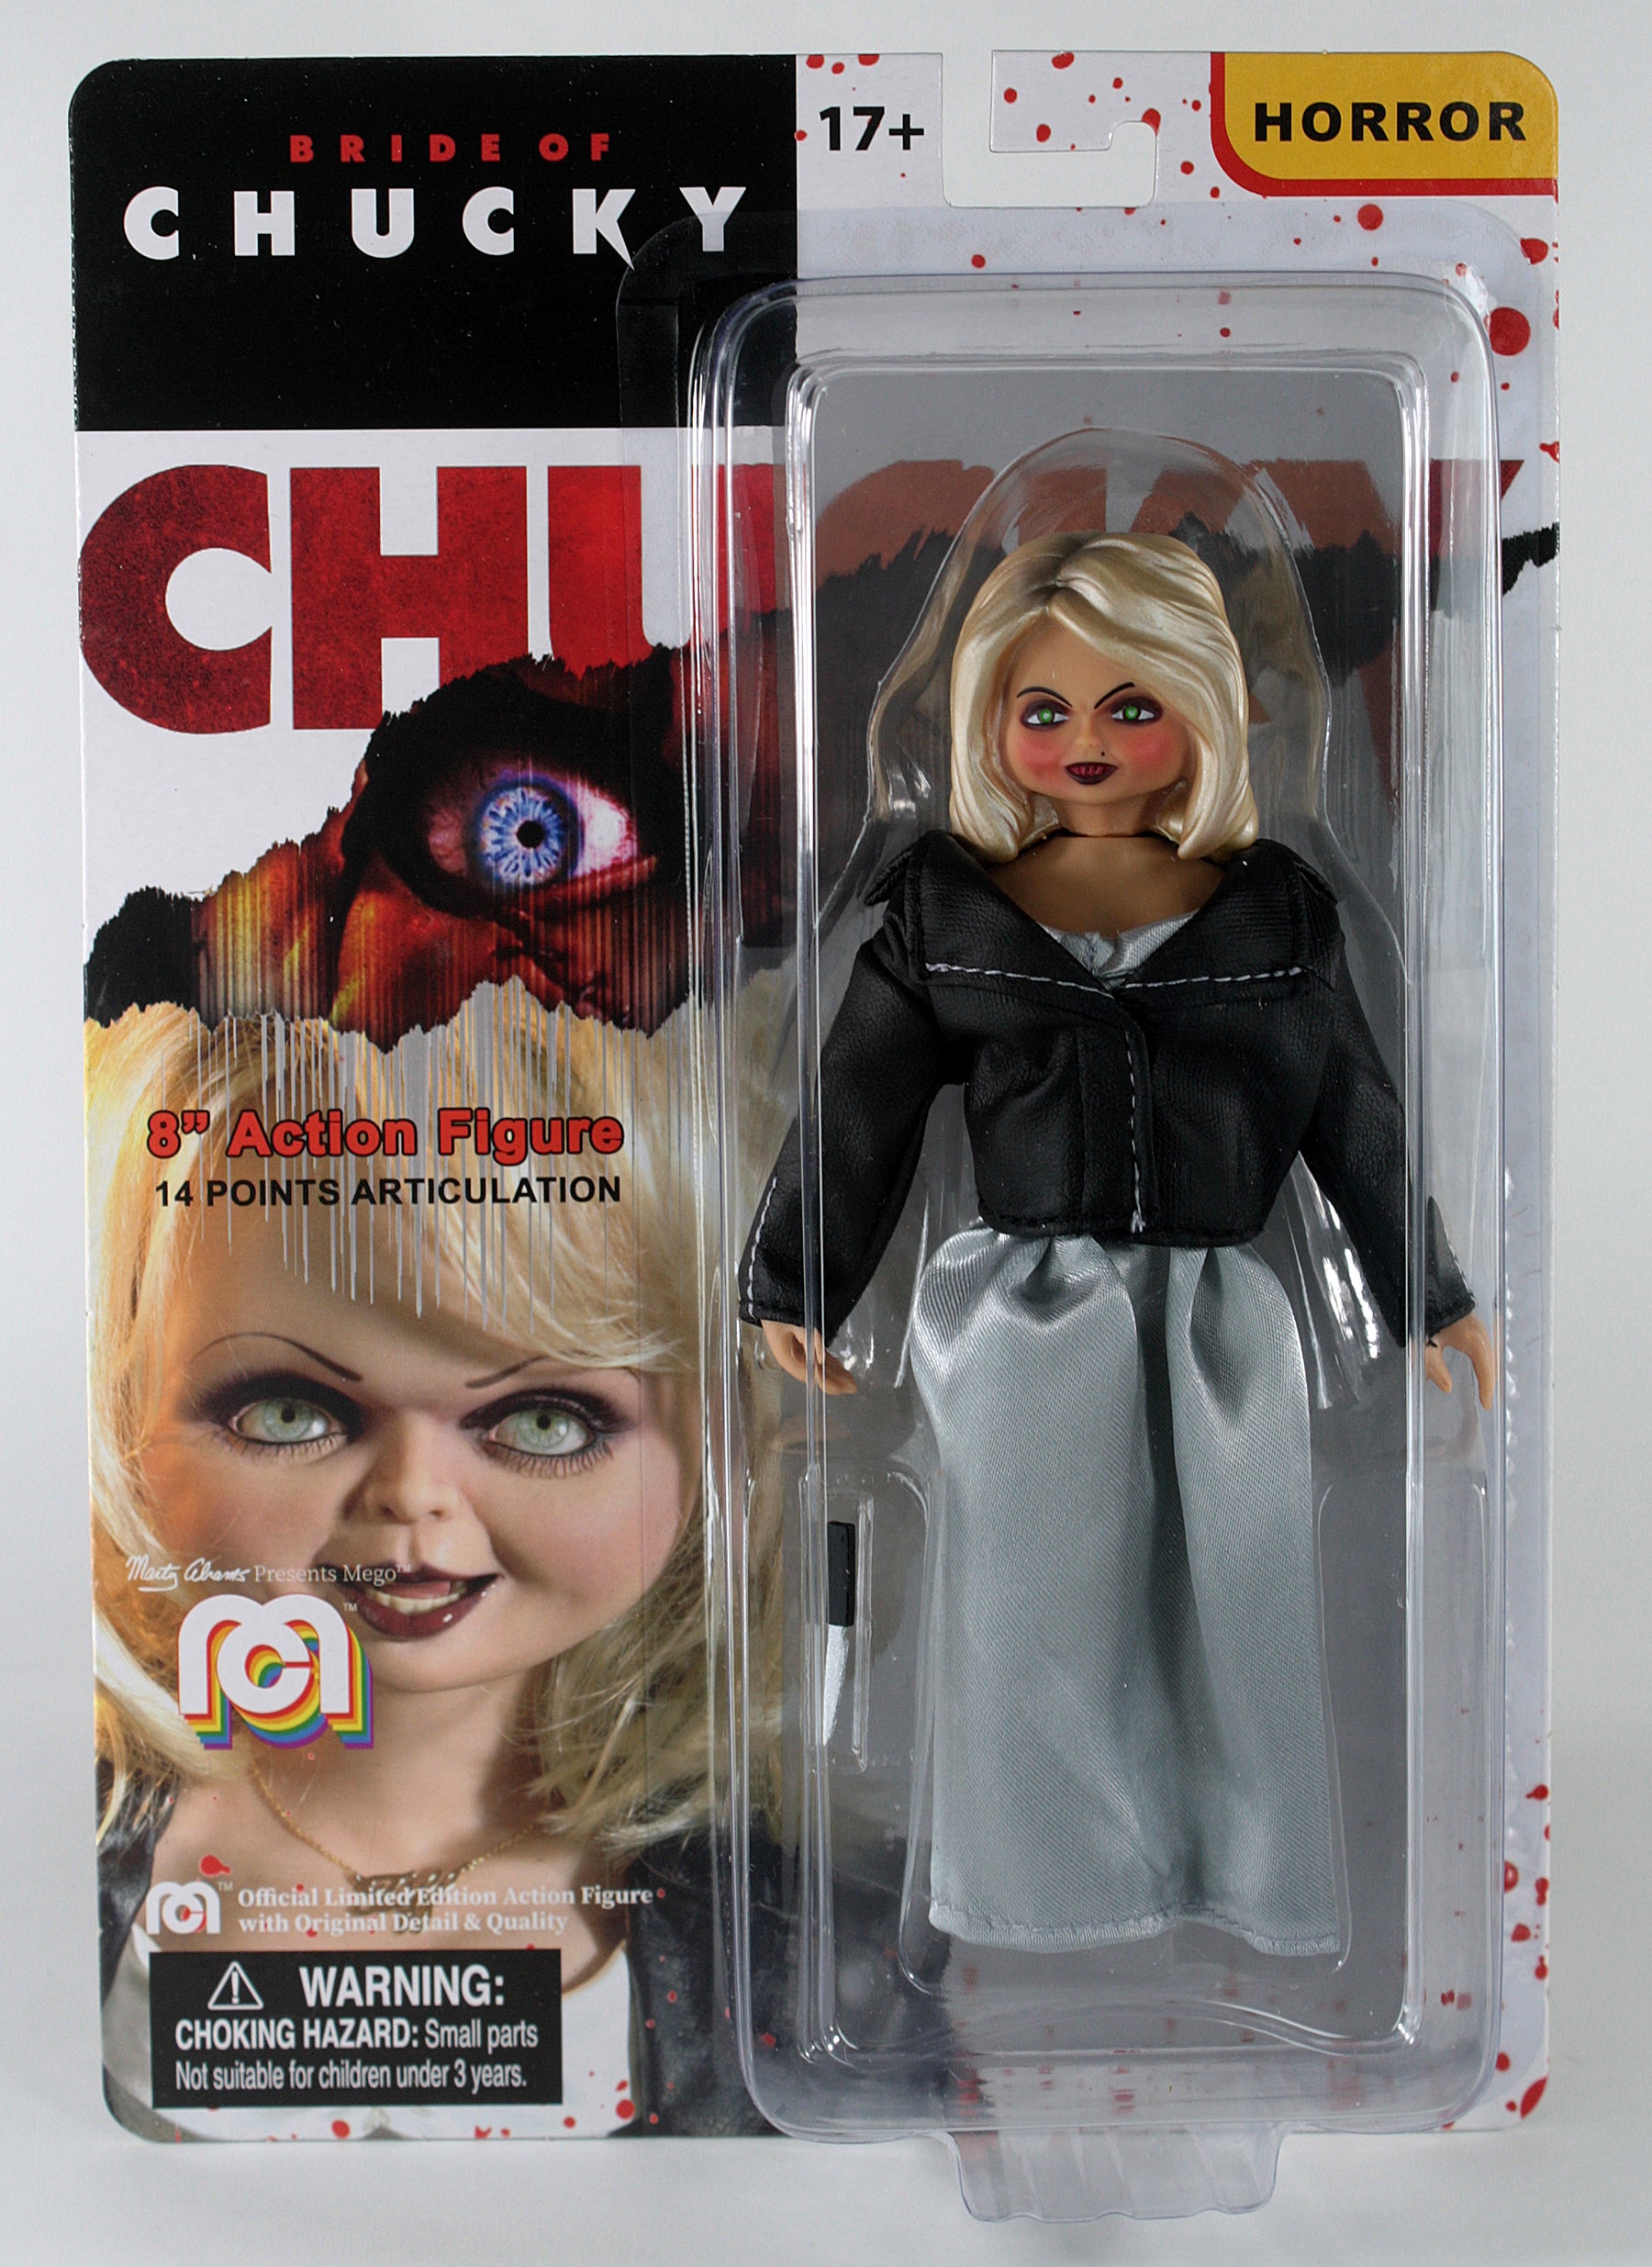 Mego Horror Wave 14 - Bride of Chucky 8" Action Figure